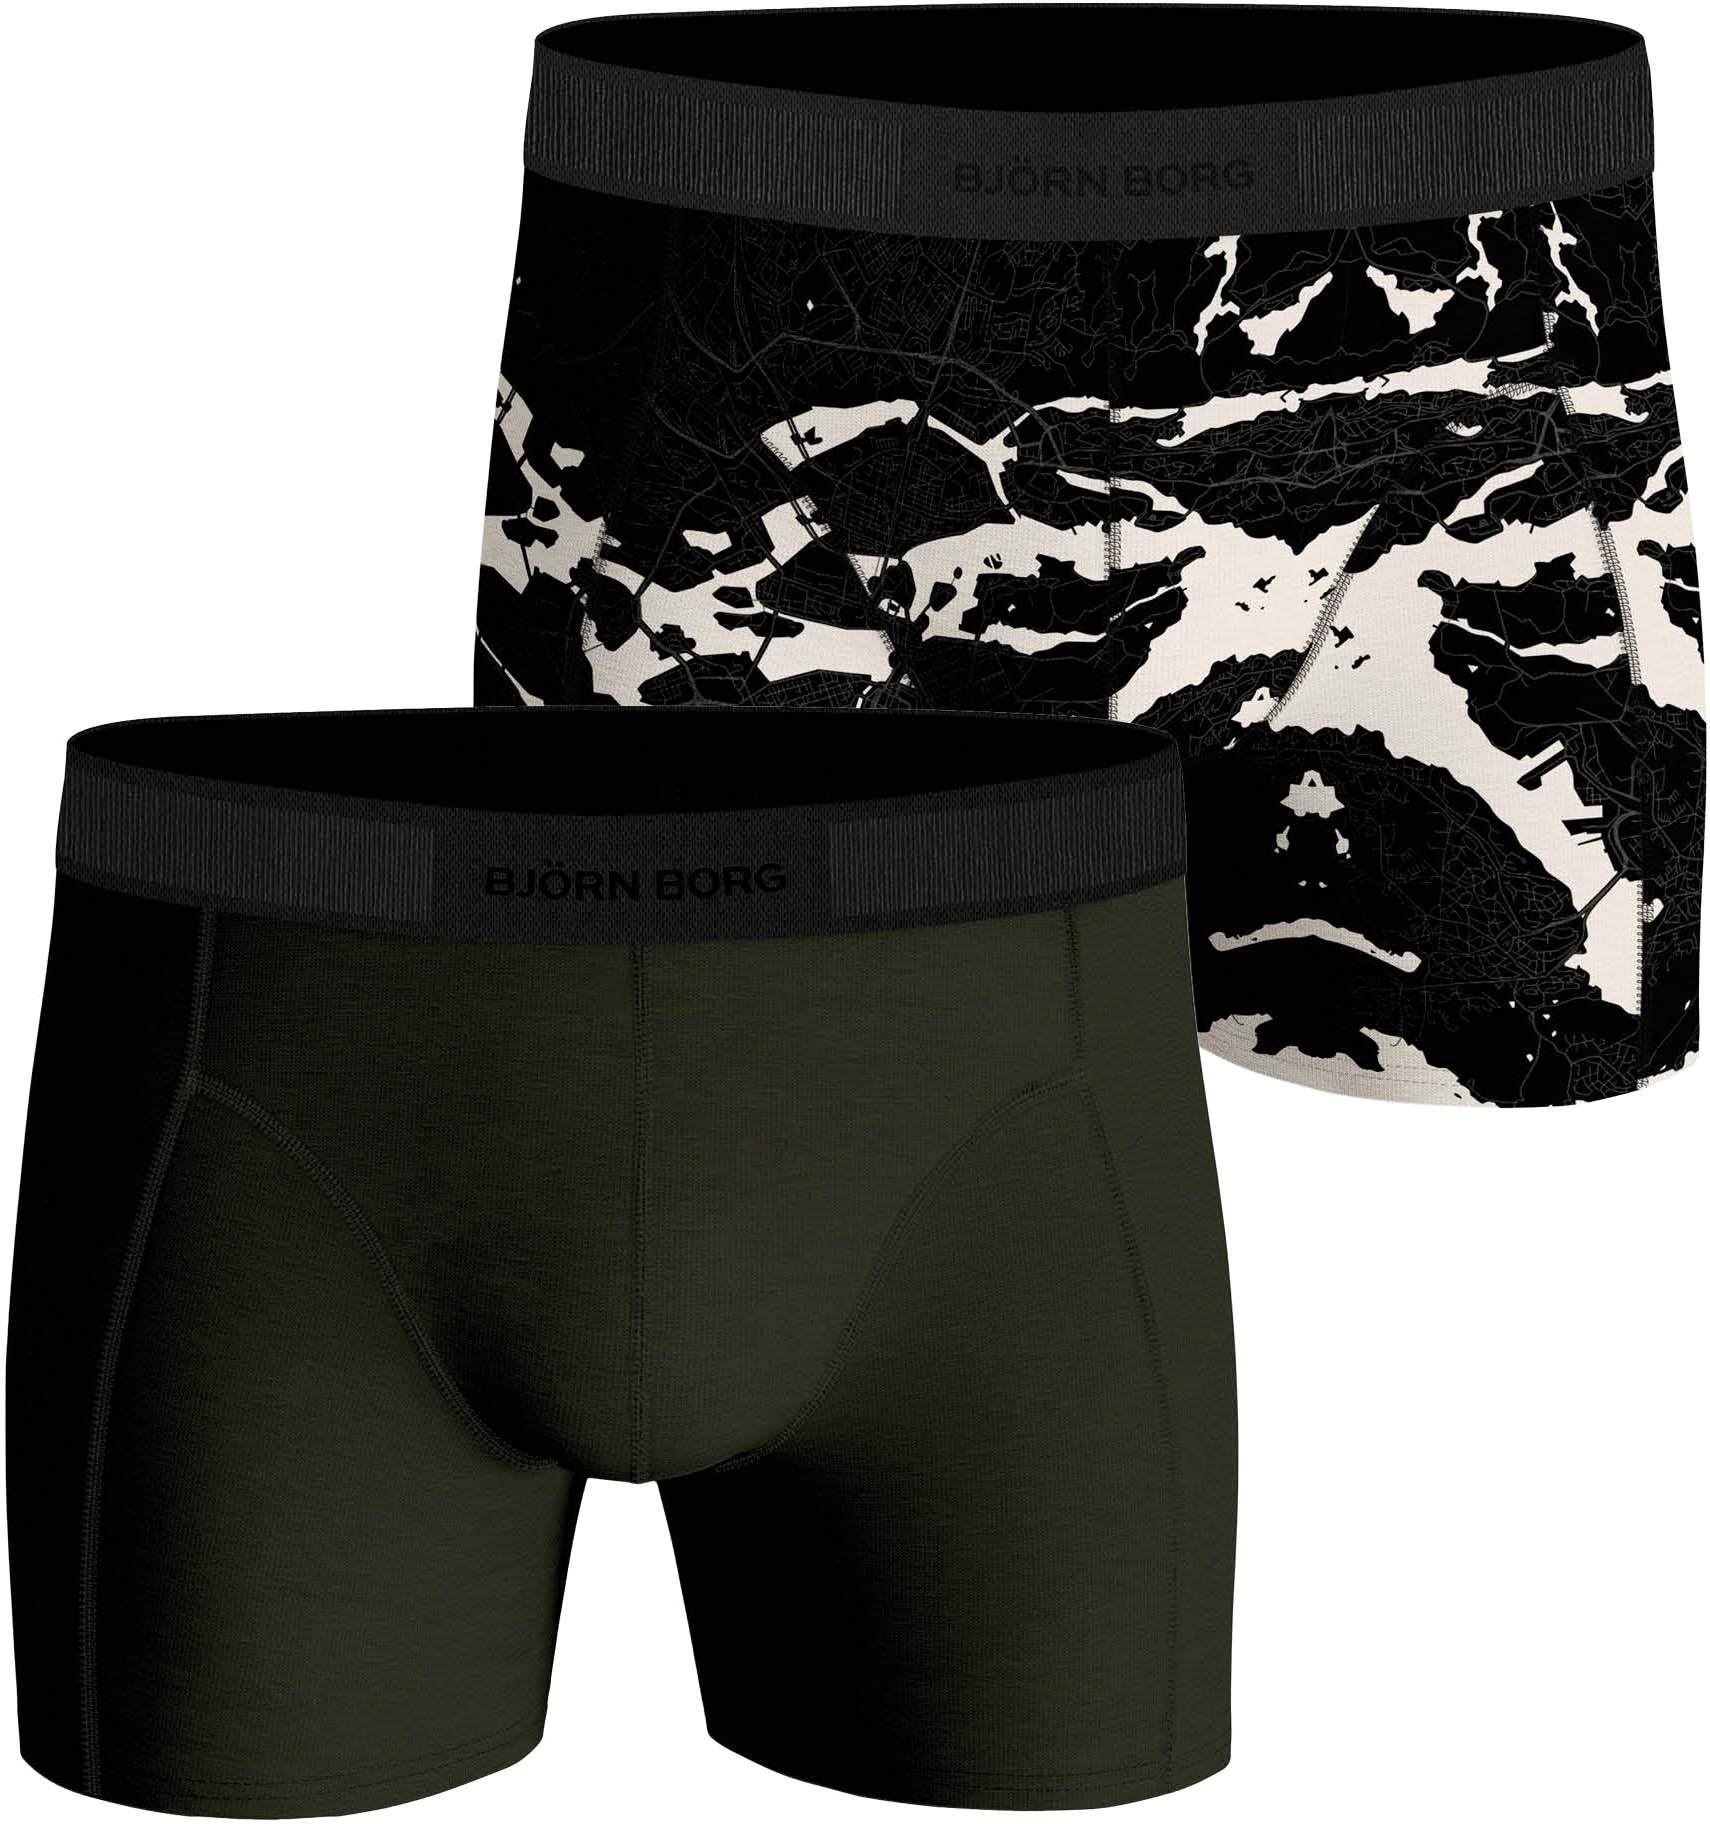 Bjorn Borg Boxer Shorts 2-Pack Core Multicolour Black Dark Green size XL